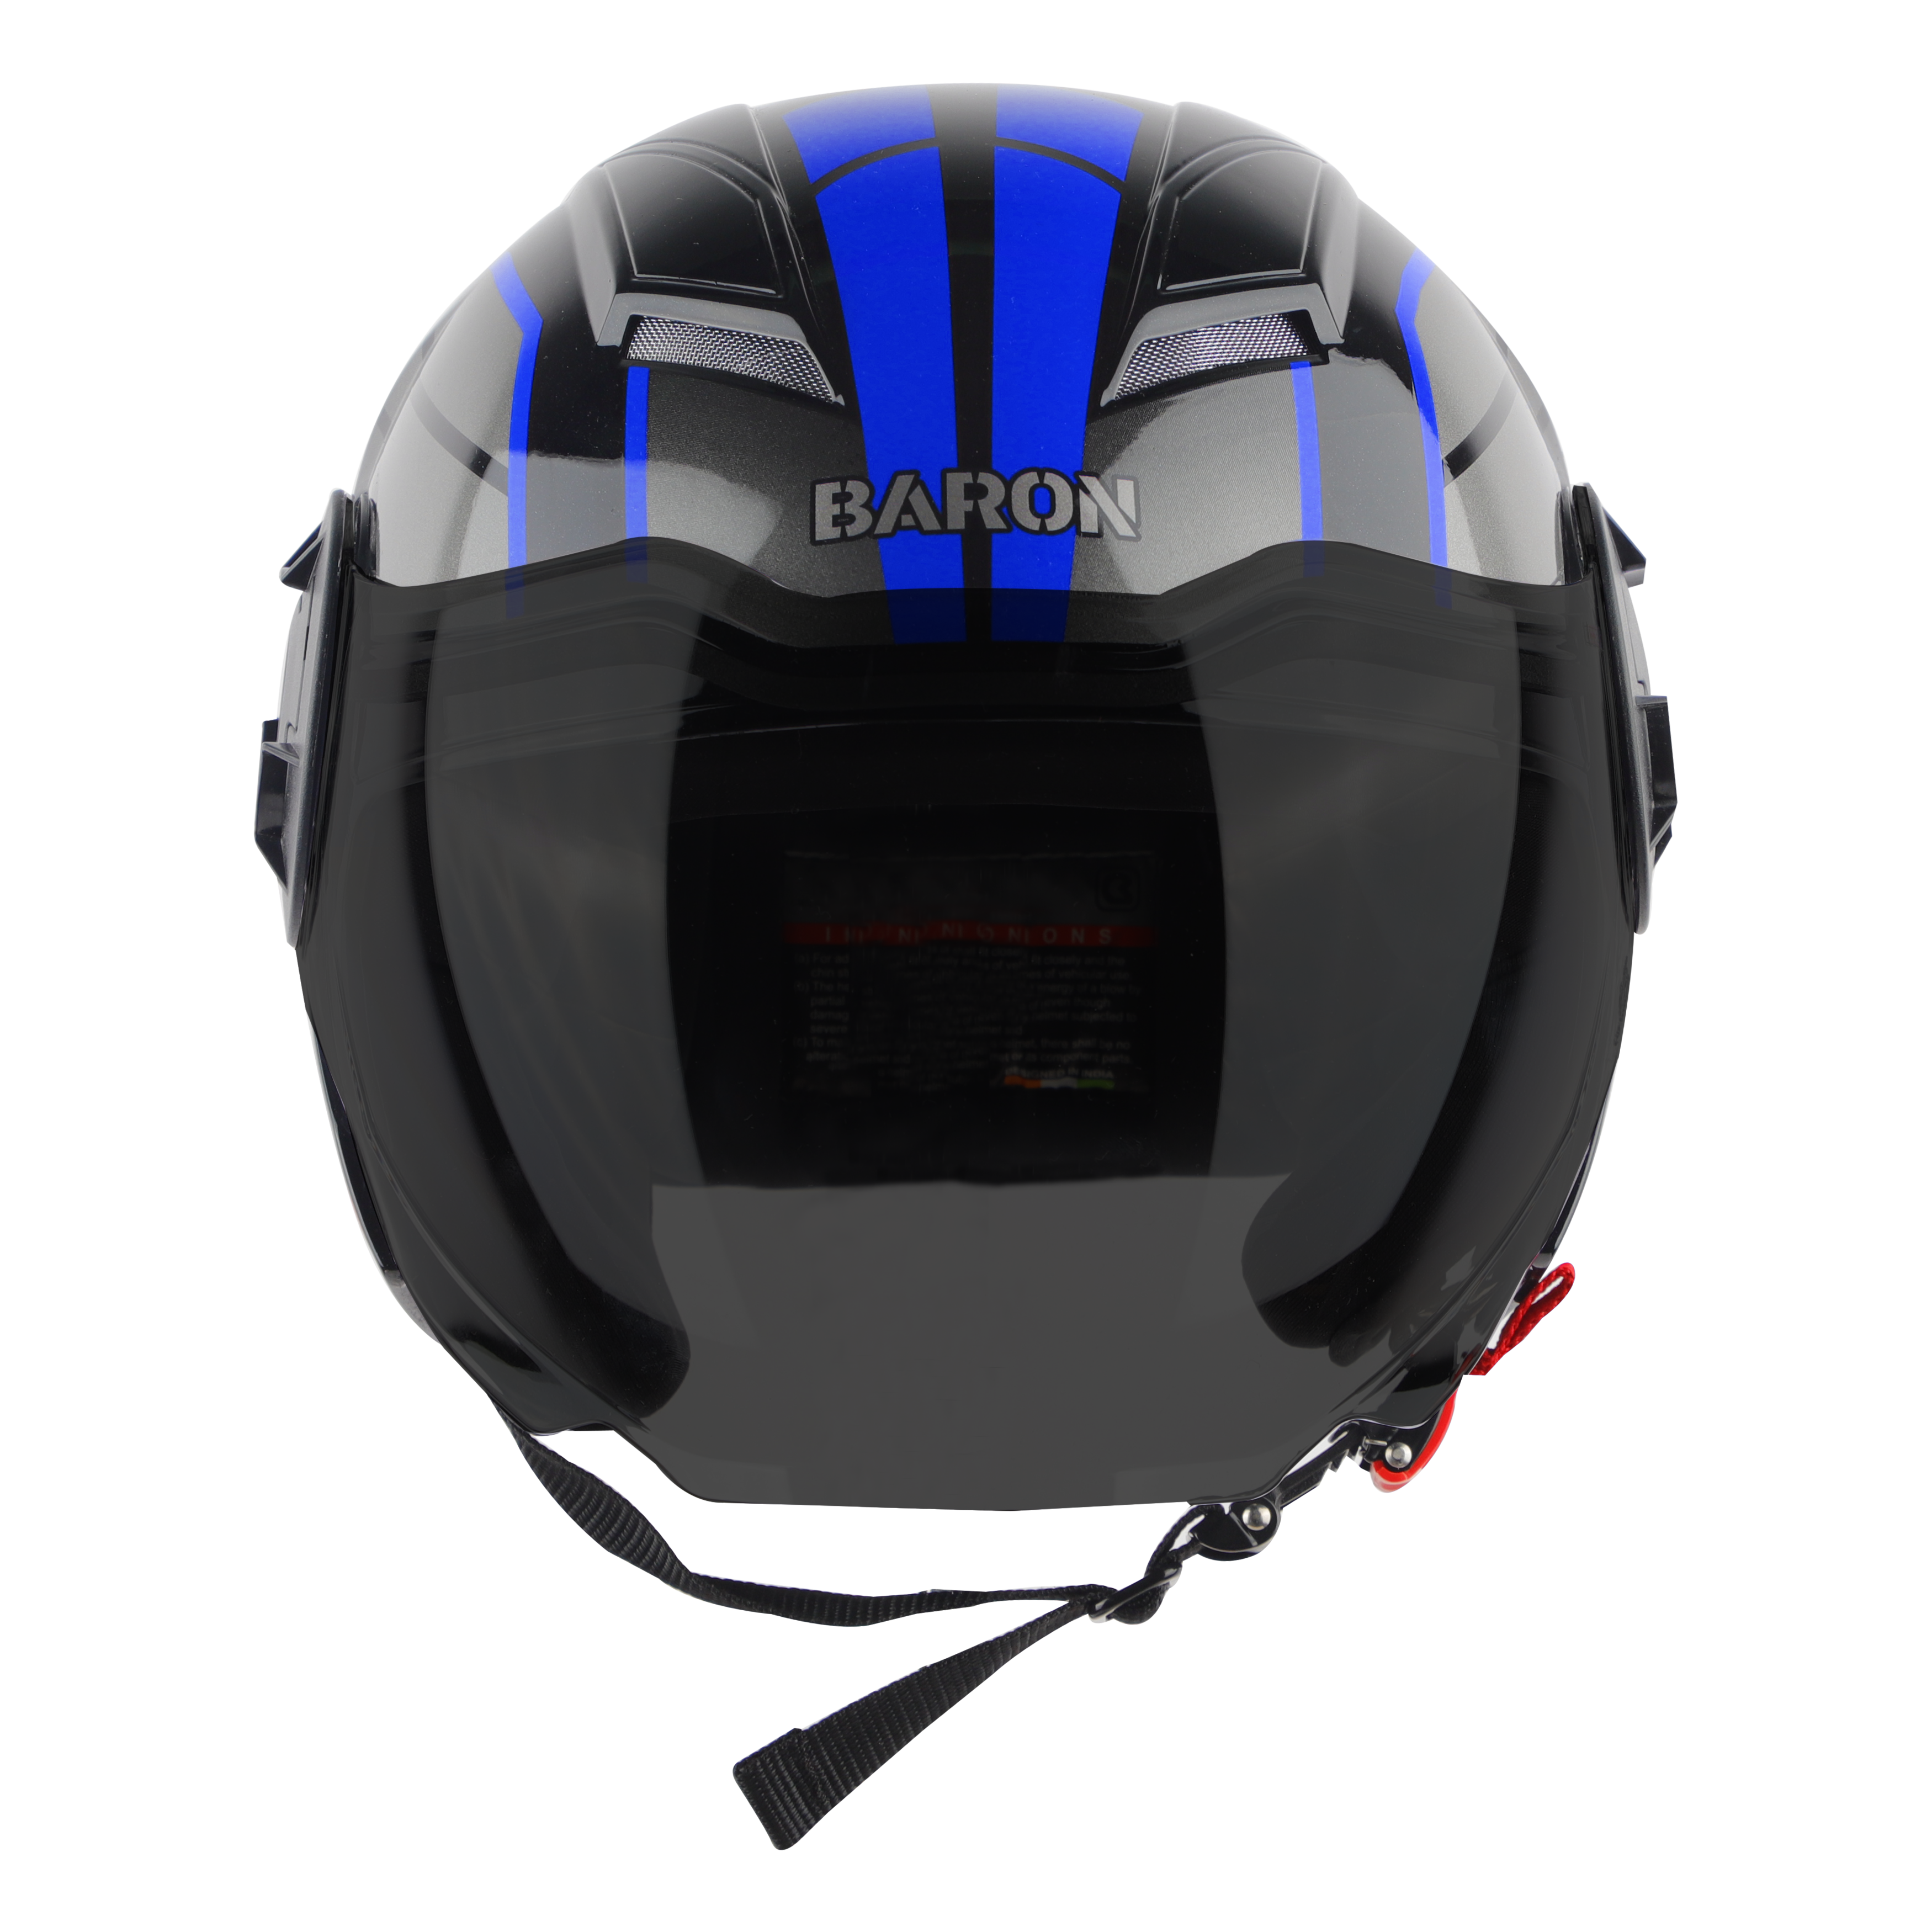 Steelbird SBH-31 Baron ISI Certified Open Face Helmet For Men And Women (Matt Black Blue With Smoke Visor)